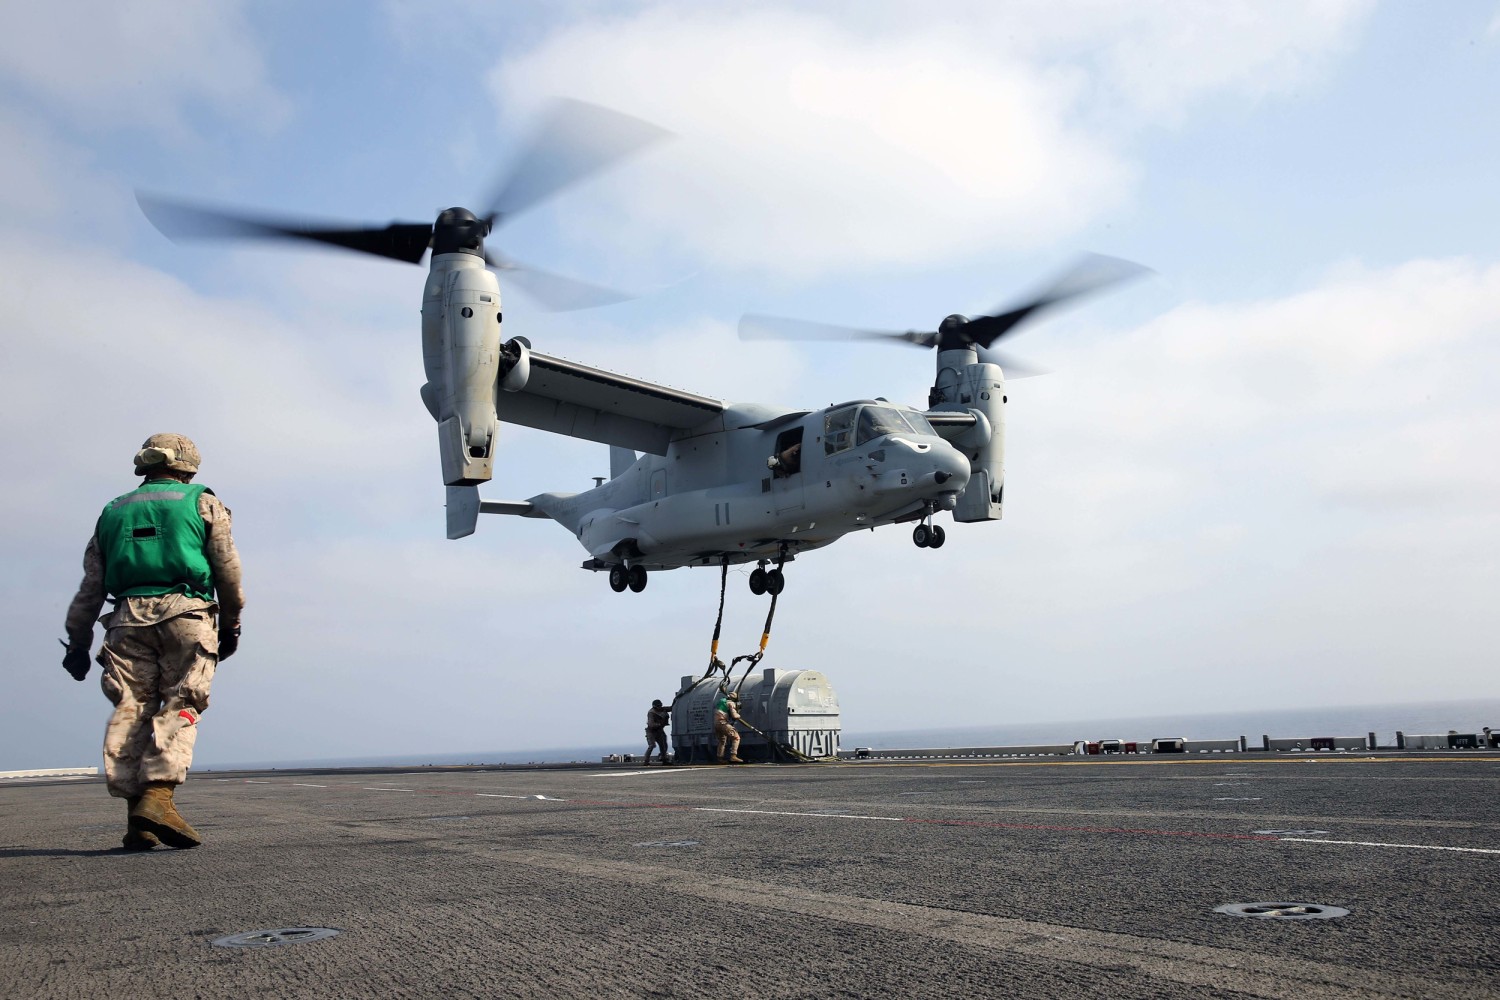 Marines determine mechanical failure in Osprey crash that killed 5